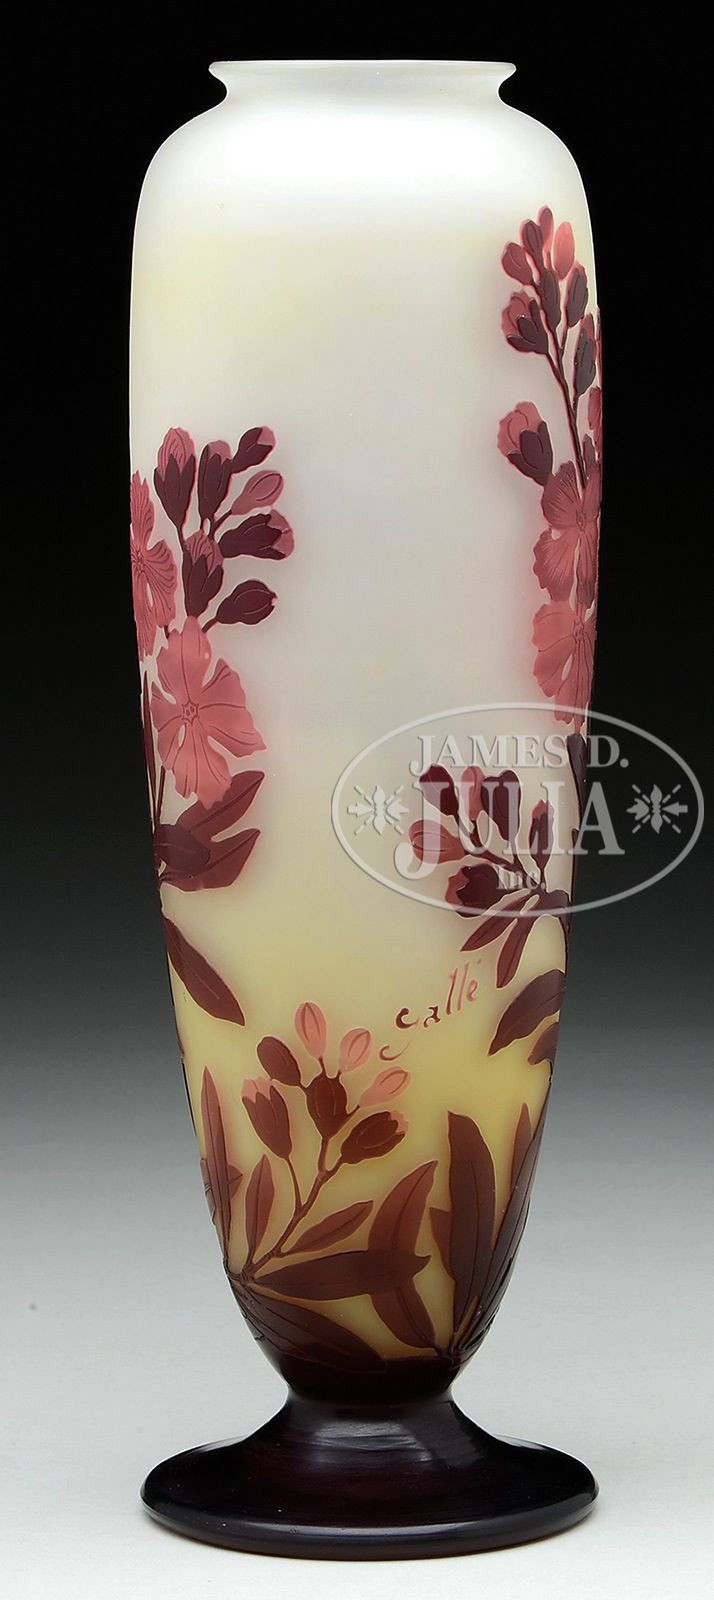 15 Stylish Cameo Glass Vase 2024 free download cameo glass vase of 28cm 18th nov 2015 jams julia galle floral cameo vase vases with 28cm 18th nov 2015 jams julia galle floral cameo vase